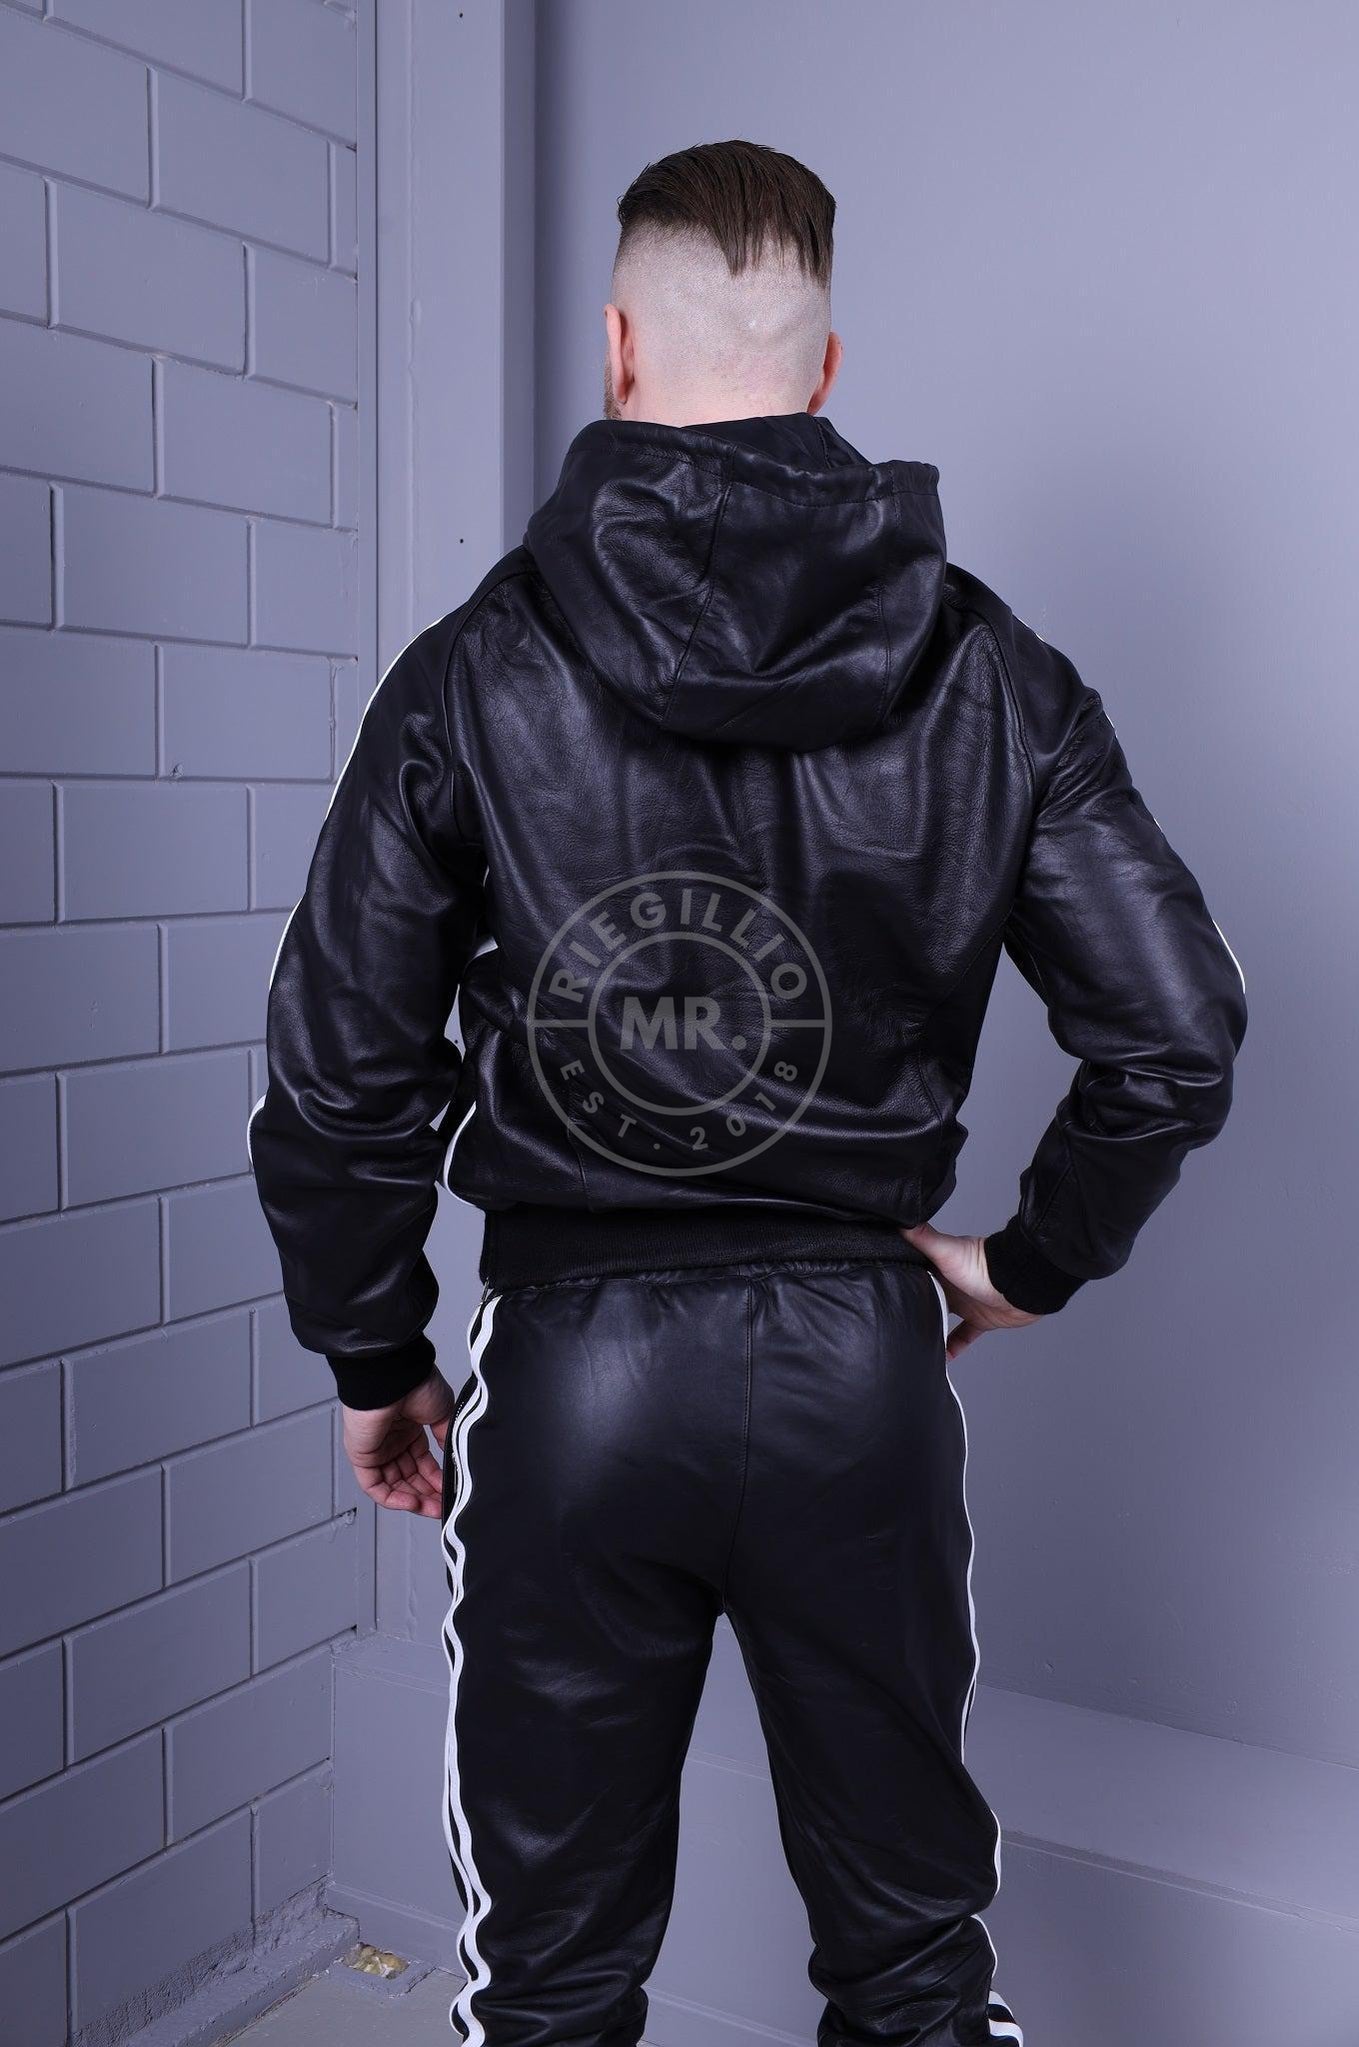 Black Leather Sports Pants at MR. Riegillio